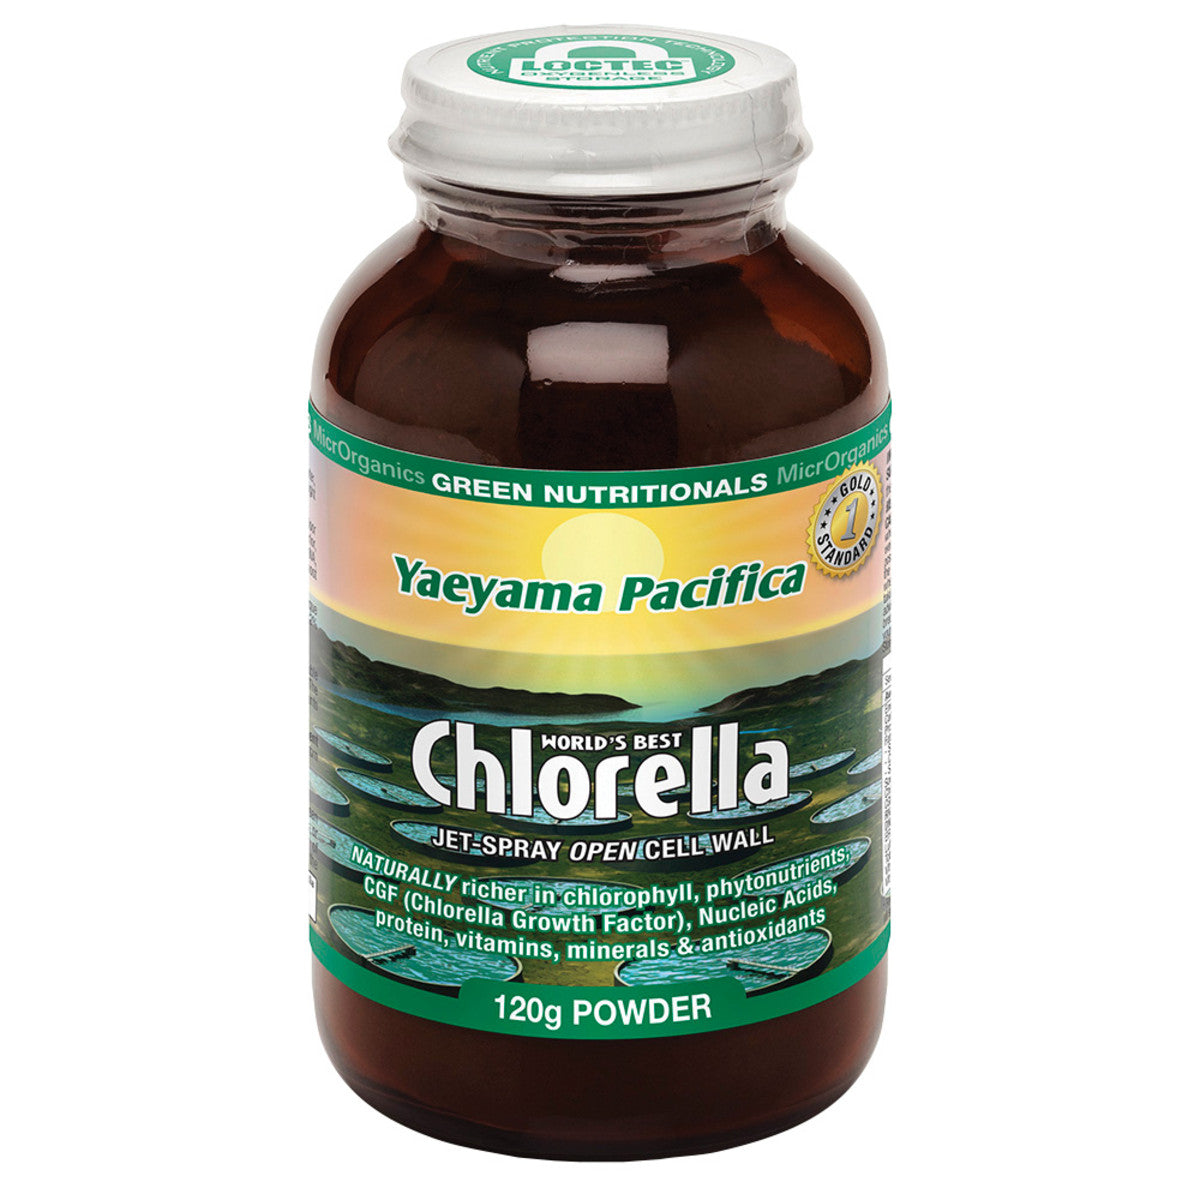 Green Nutritionals - Yaeyama Pacifica Chlorella Powder